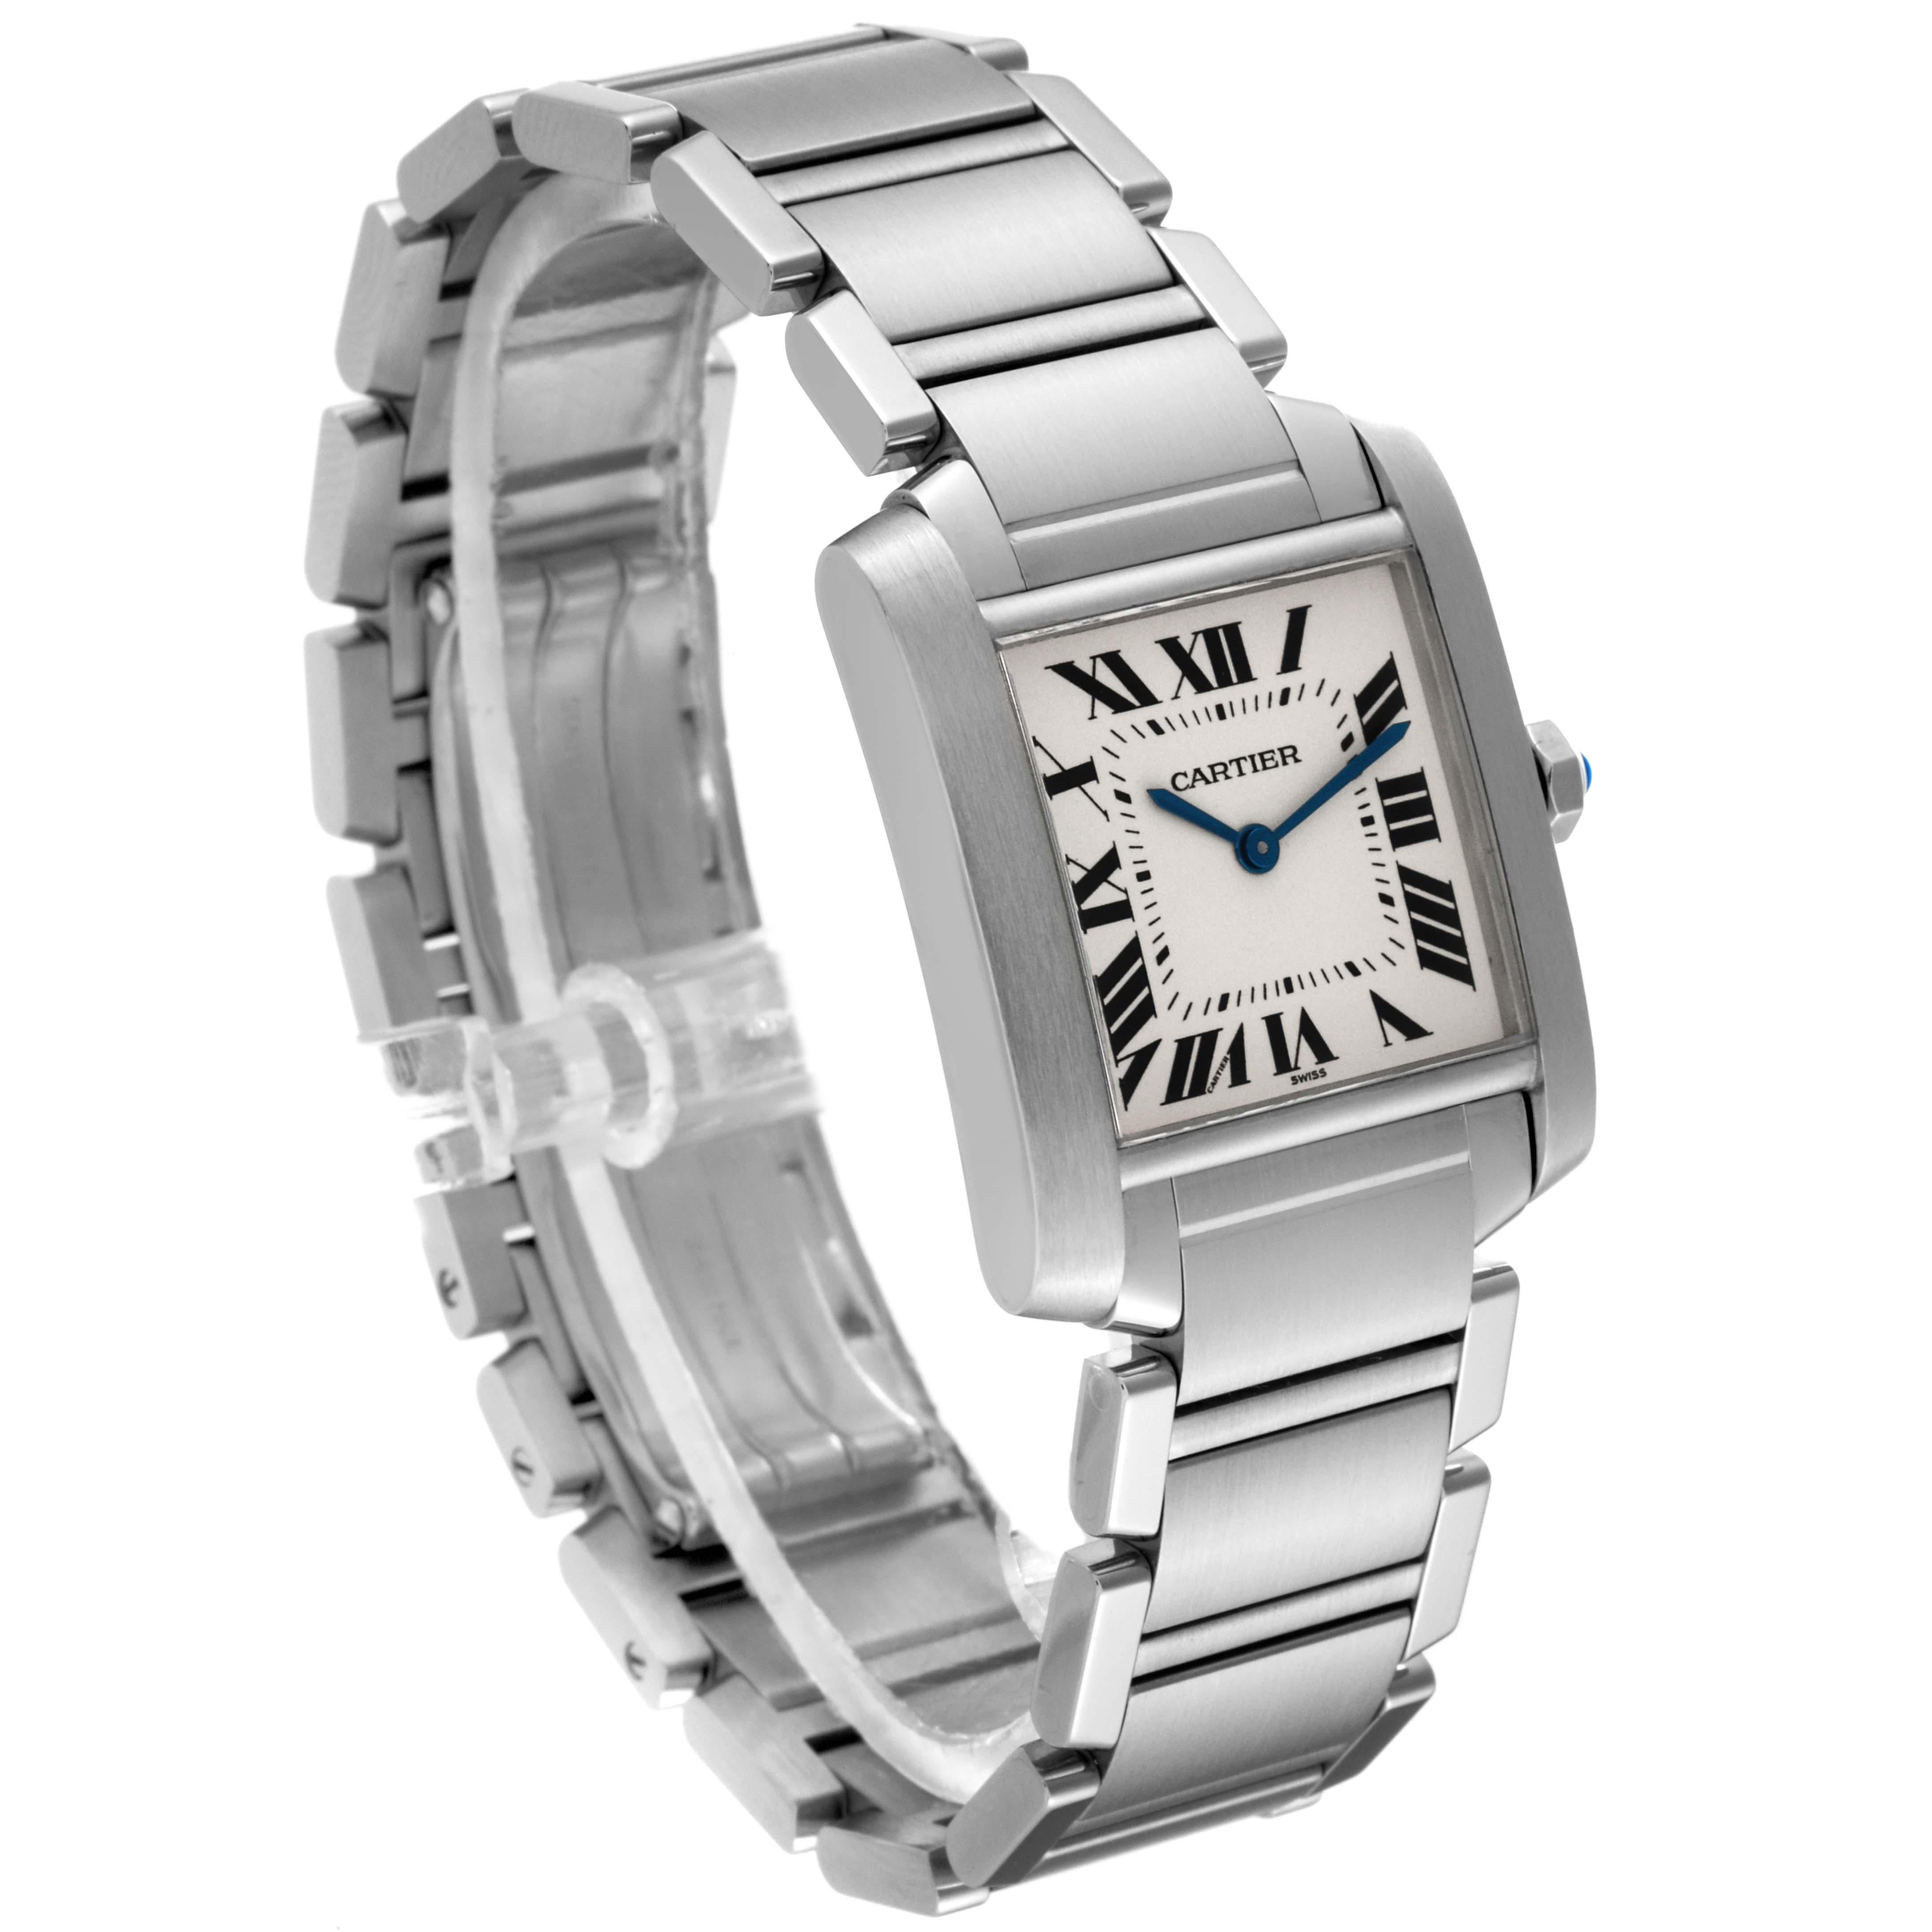 Cartier Tank Francaise Midsize Silver Dial Ladies Watch W51003Q3 1